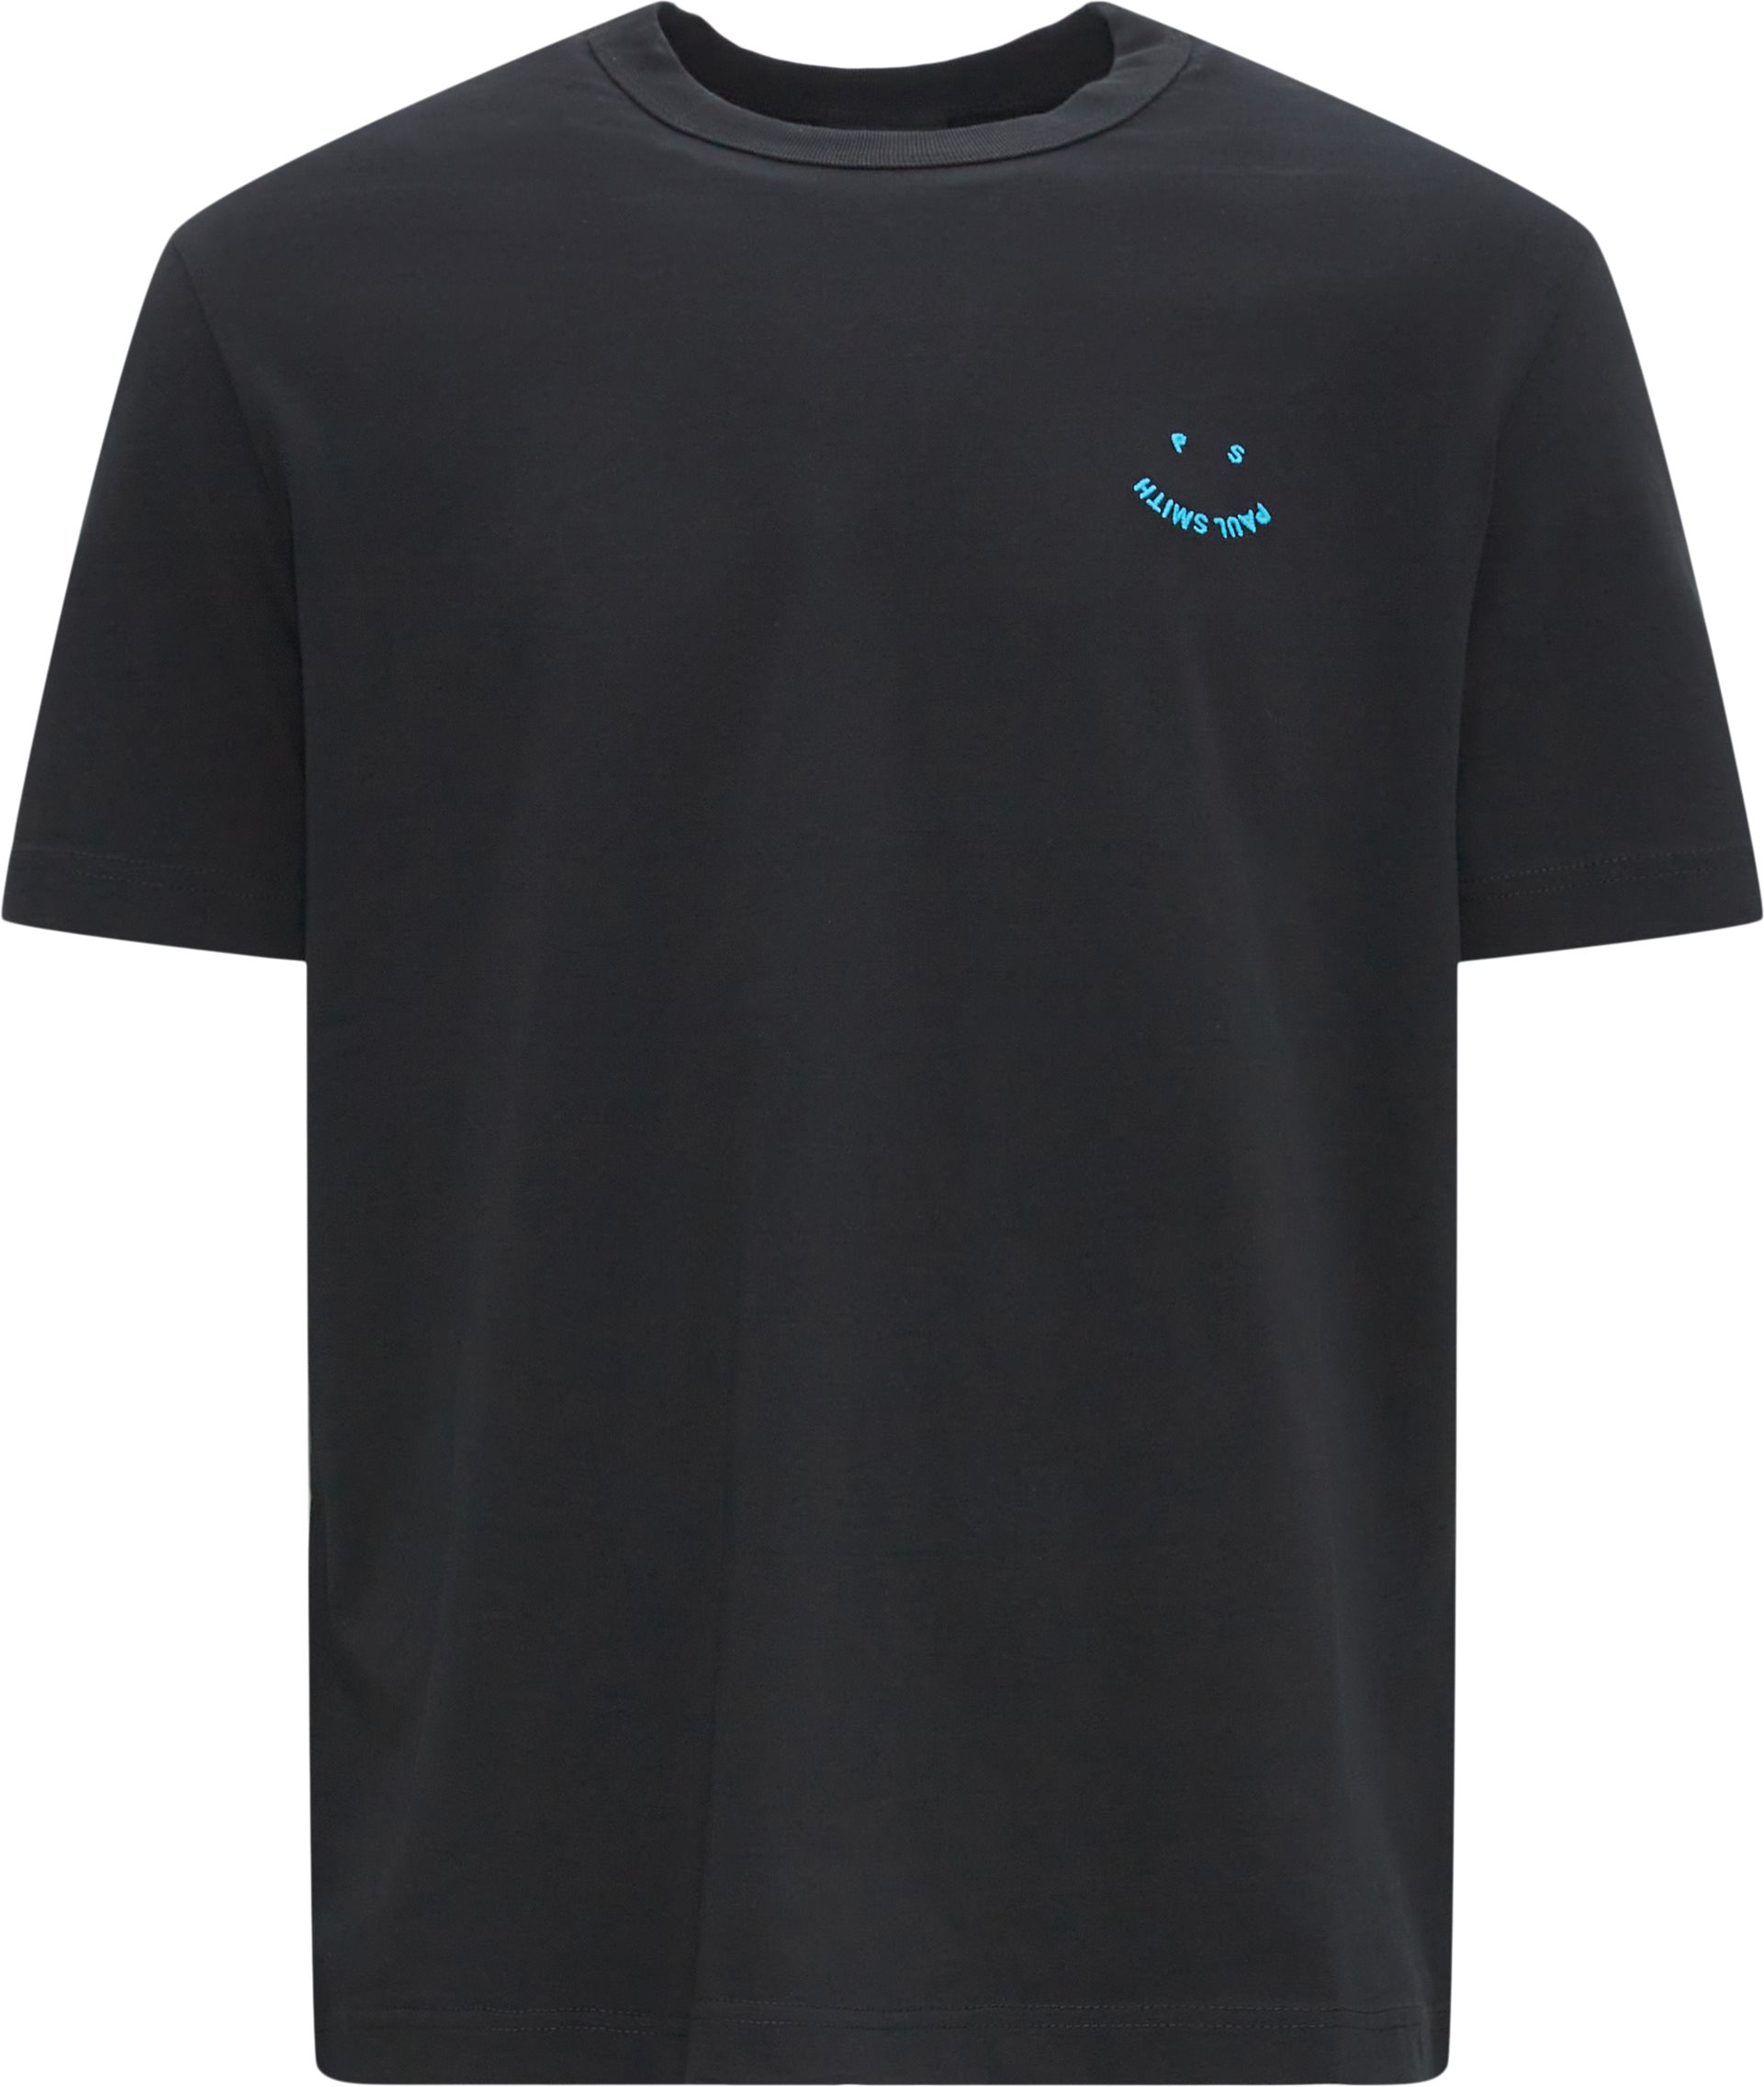 PS Paul Smith T-shirts 673XE J21154 Black